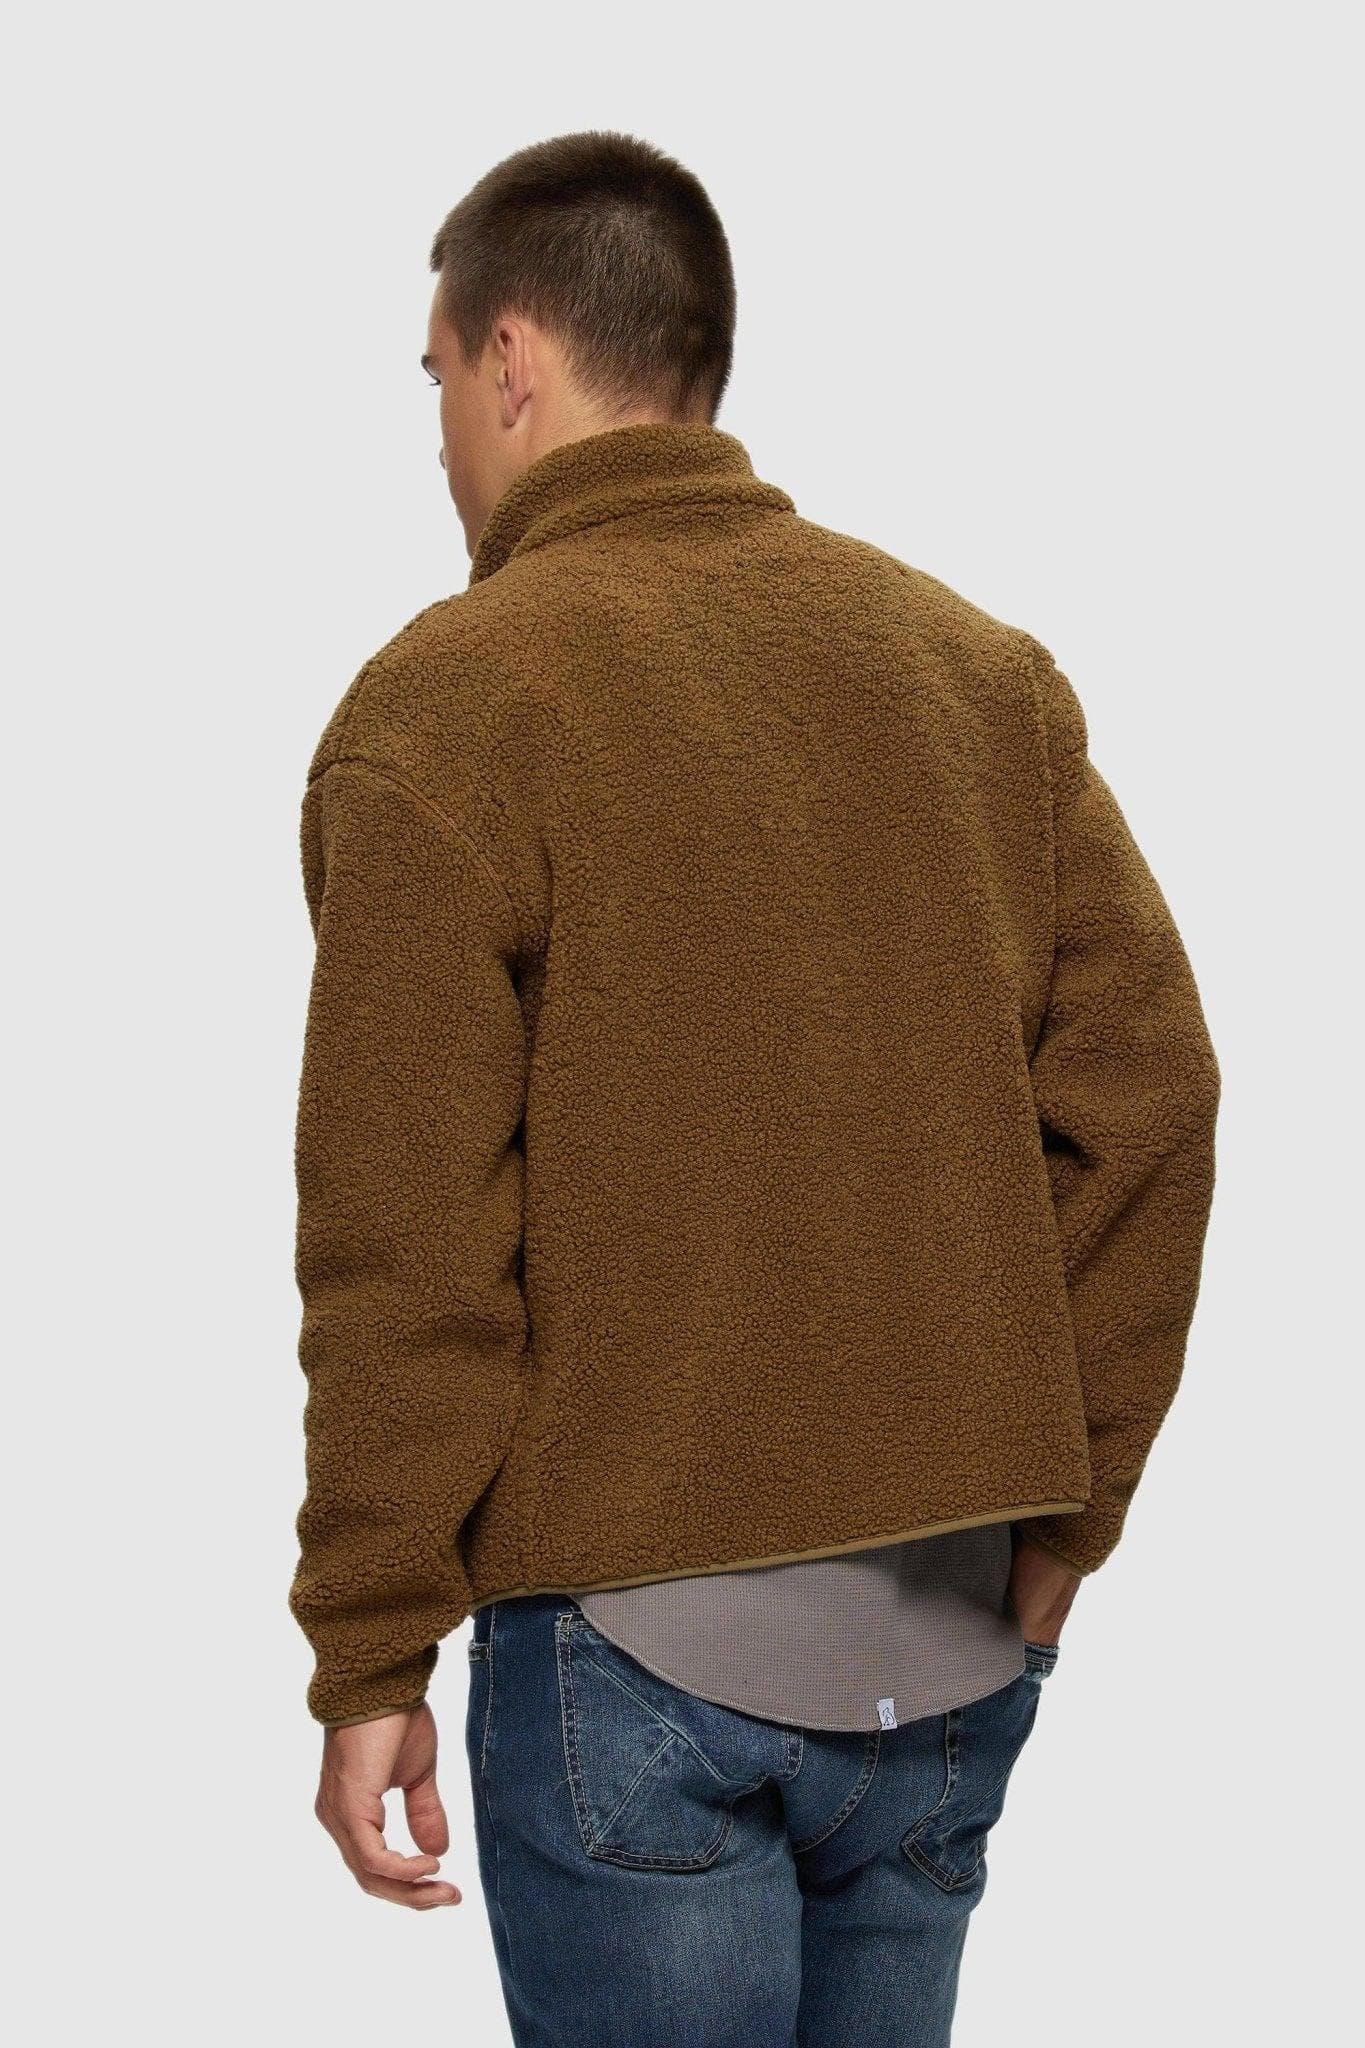 Sherpa fleece jacket — Covet & Acquire